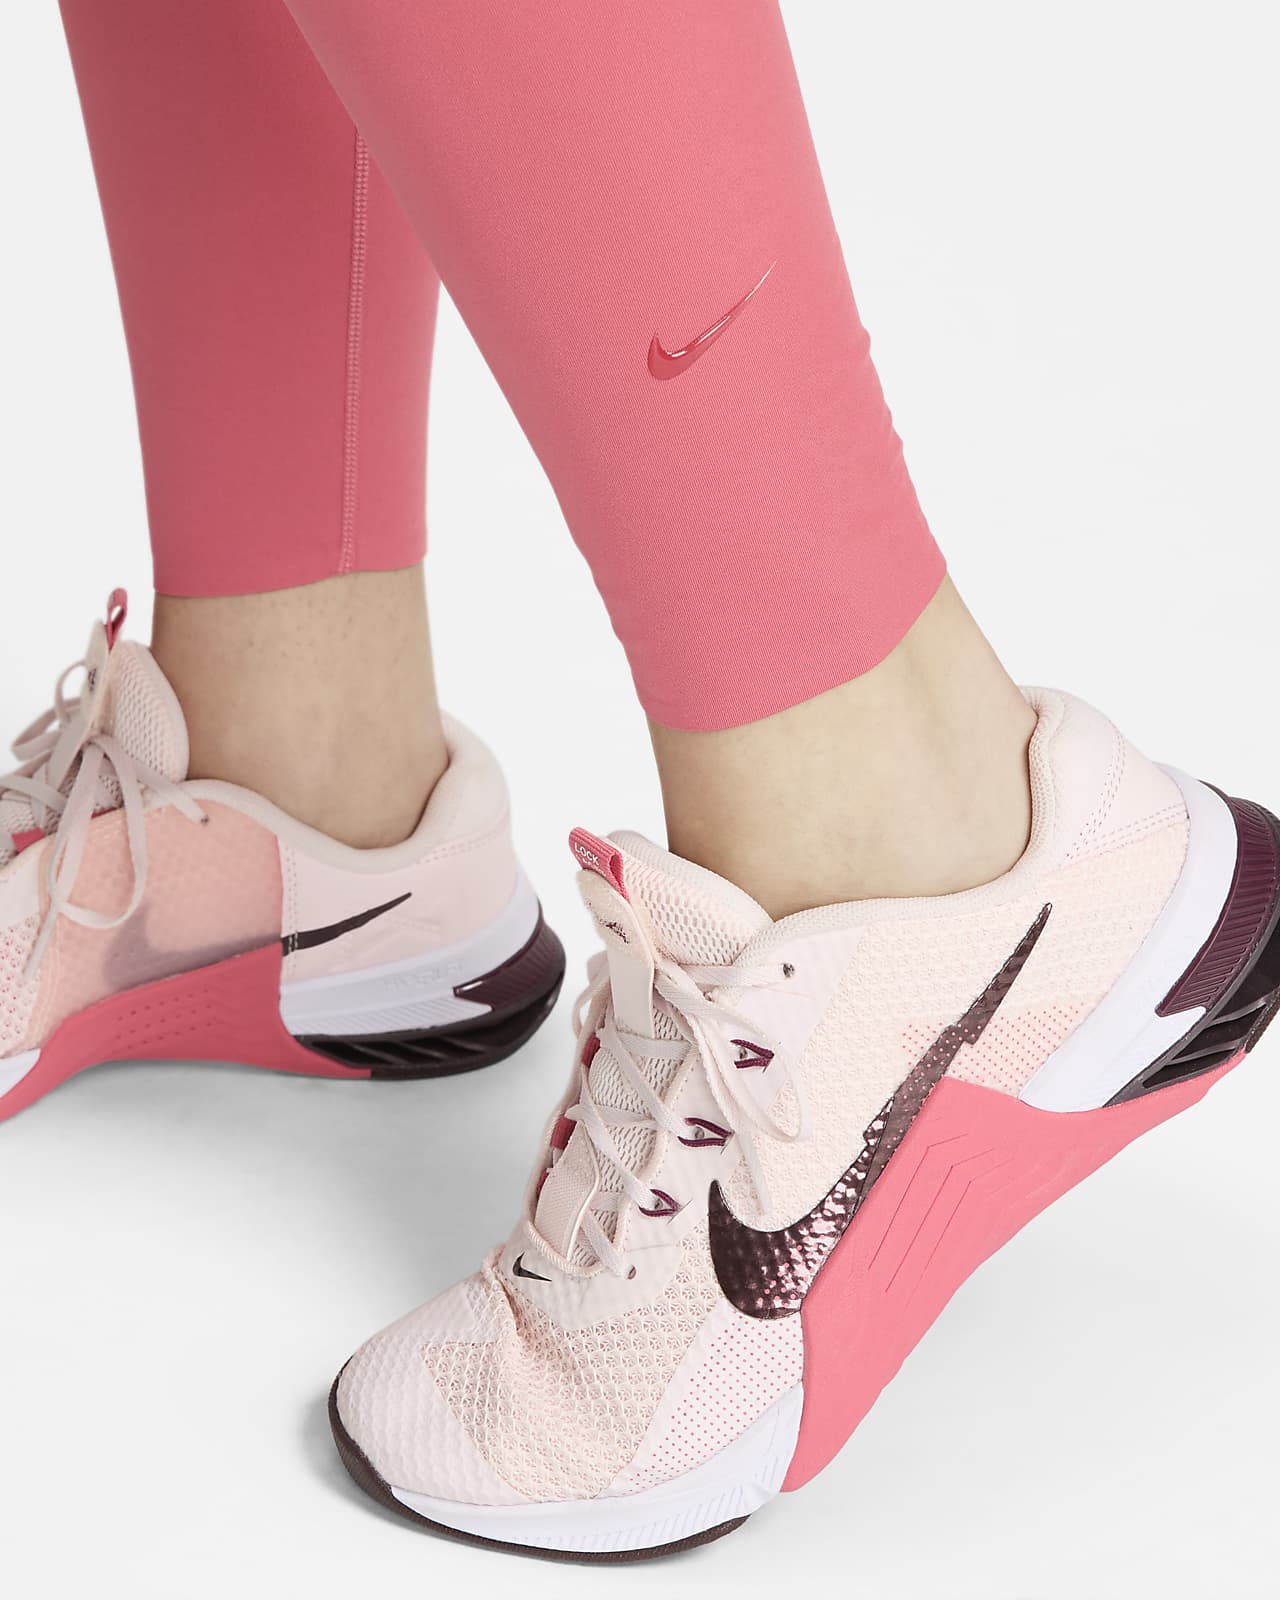 Nike Women's One Luxe 7/8 Laced Legging Purple Smoke CZ9932-531